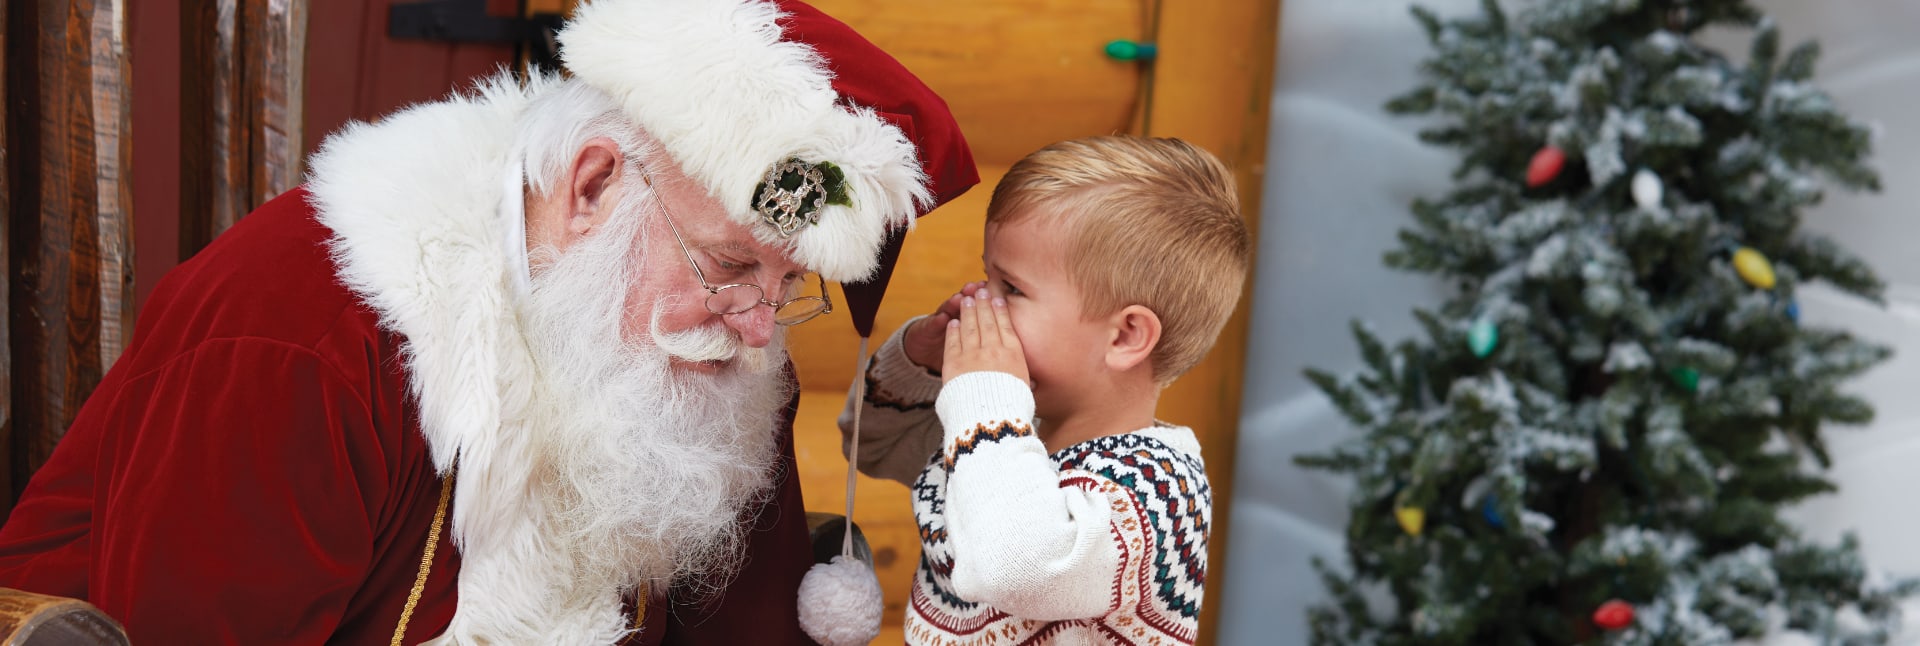 Santa Clause with Kid at Bass Pro